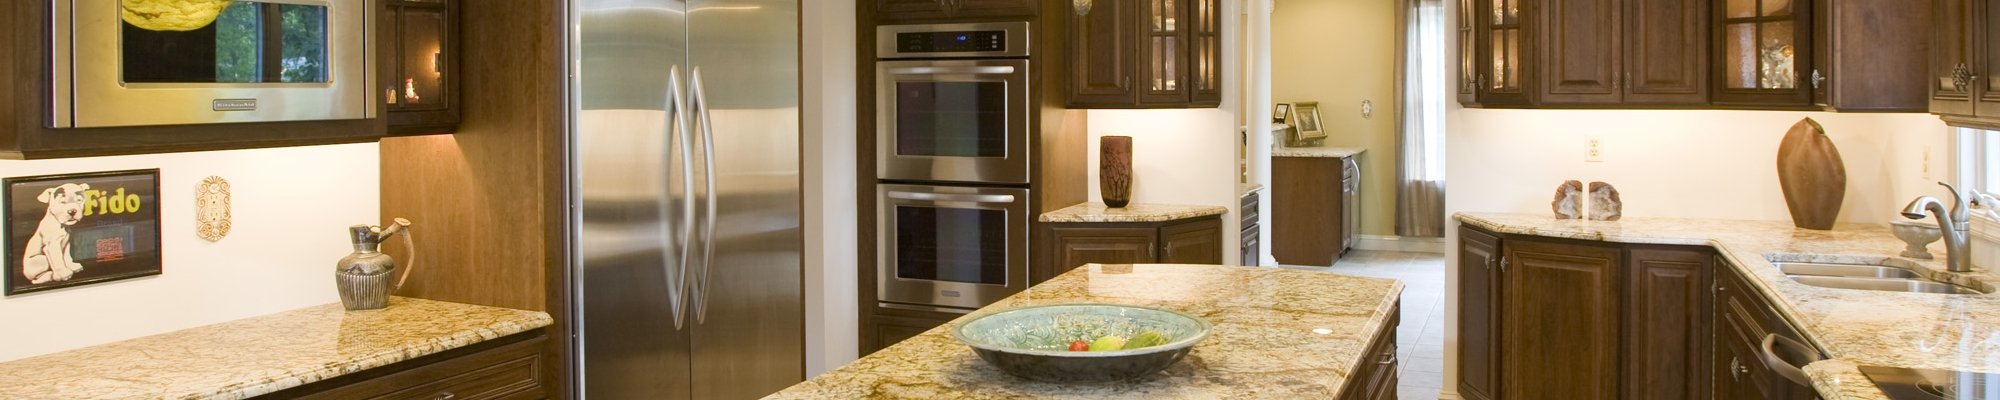 kitchen with granite countertops